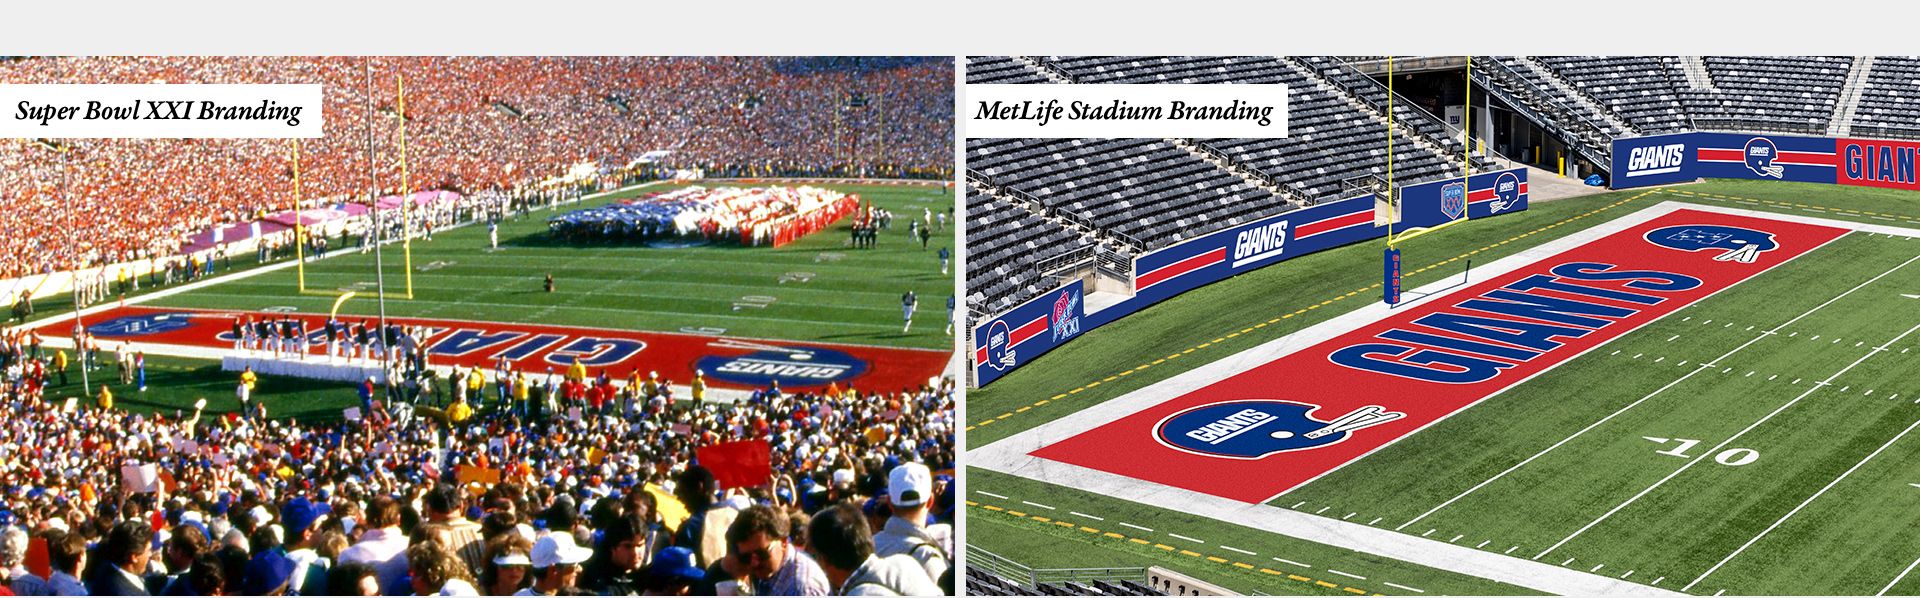 Giants legacy branding will be nostalgia heaven for fans